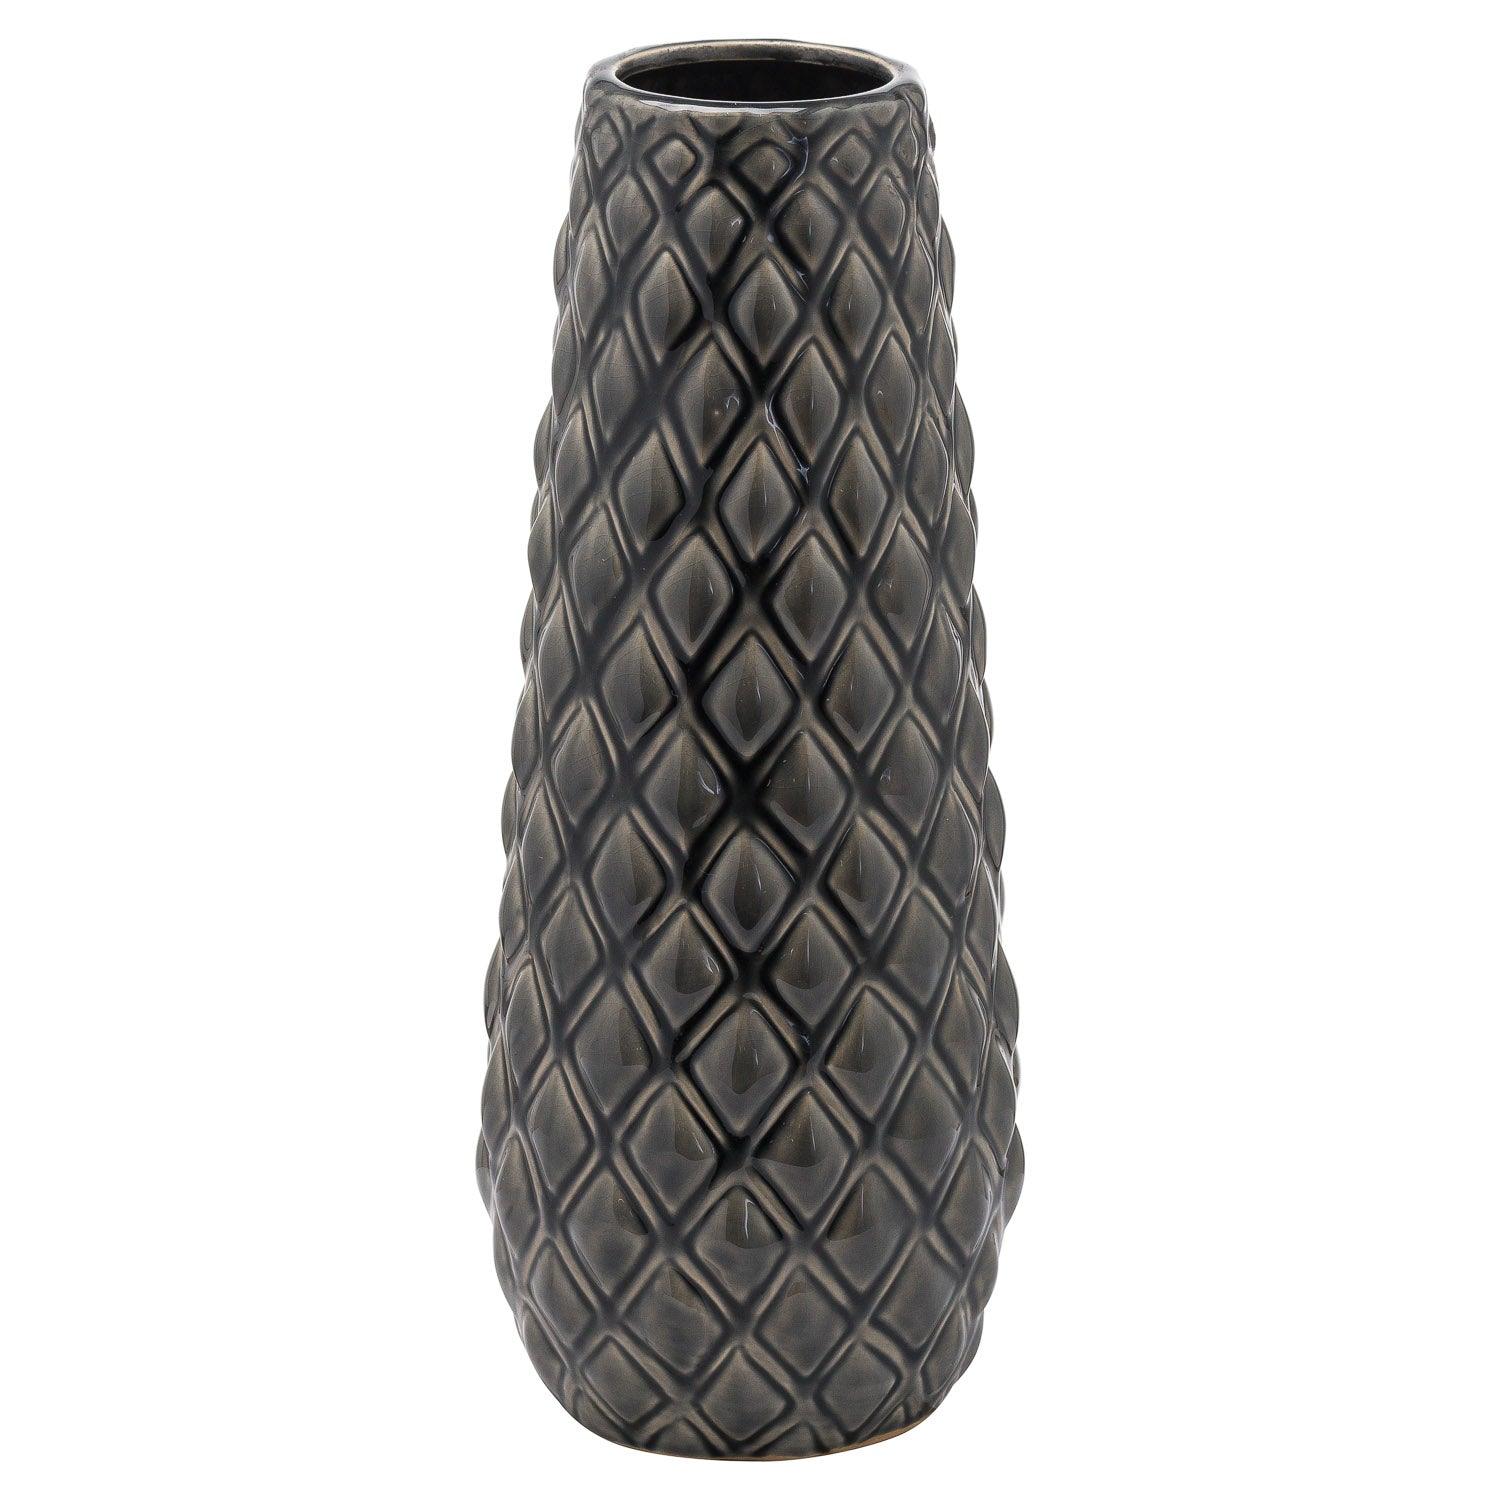 Seville Collection Alpine Vase - Vookoo Lifestyle